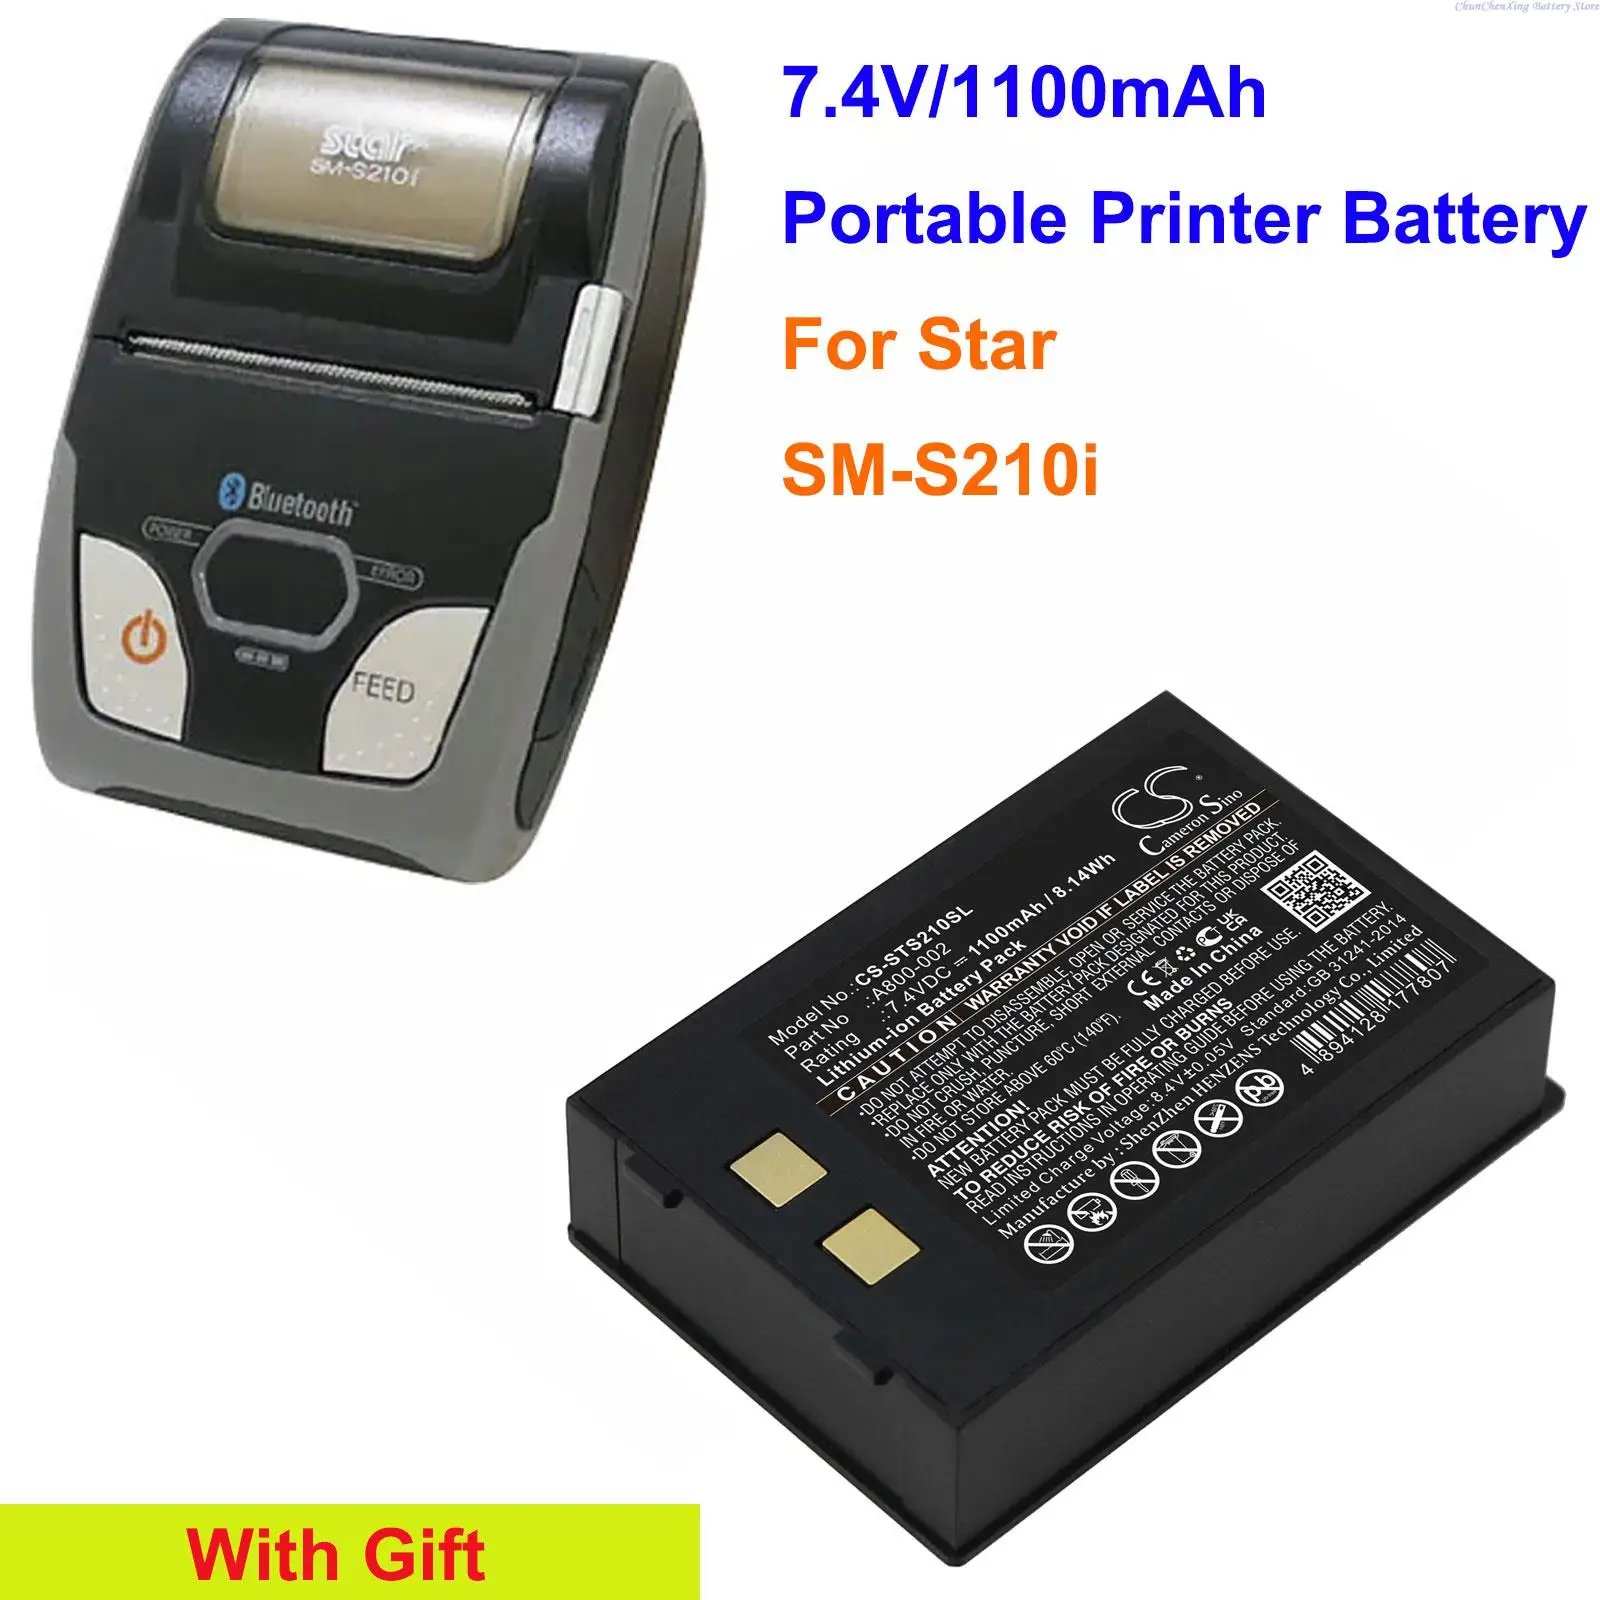 

Cameron Sino 1100mAh Portable Printer Battery A800-002 for Star SM-S210i